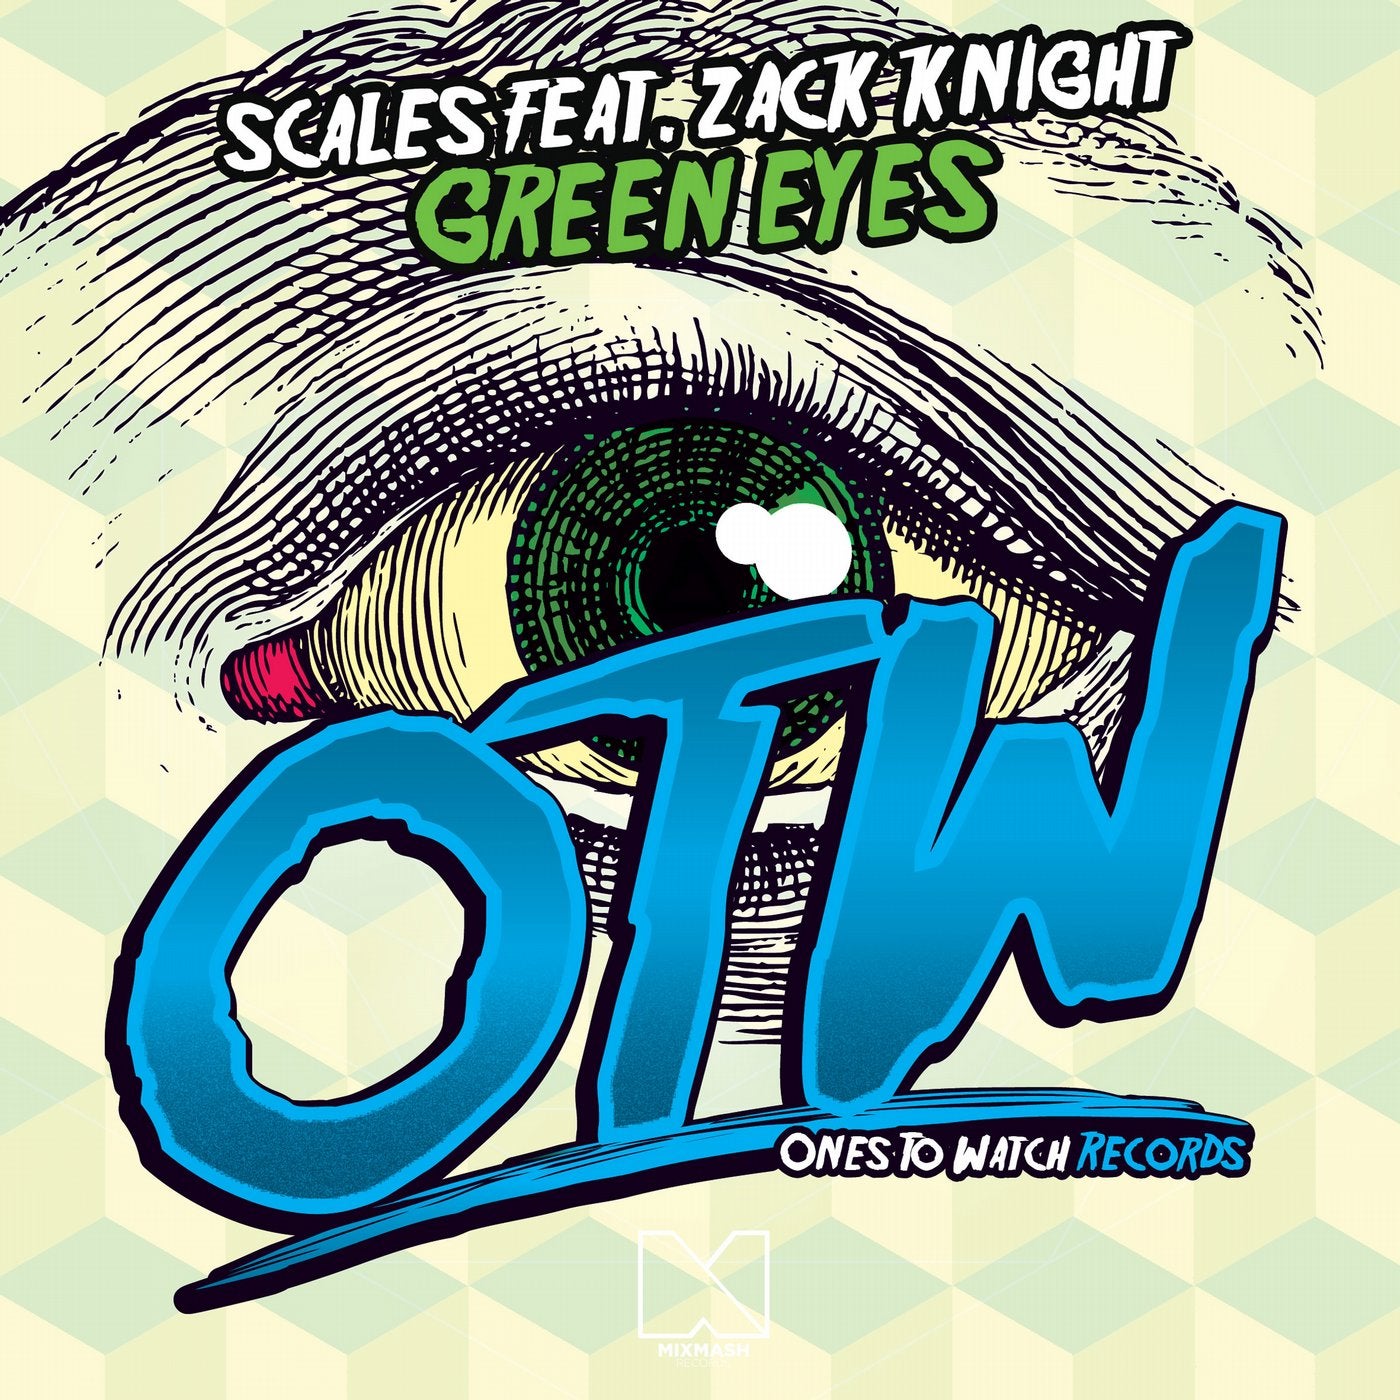 Green Eyes (feat. Zack Knight)